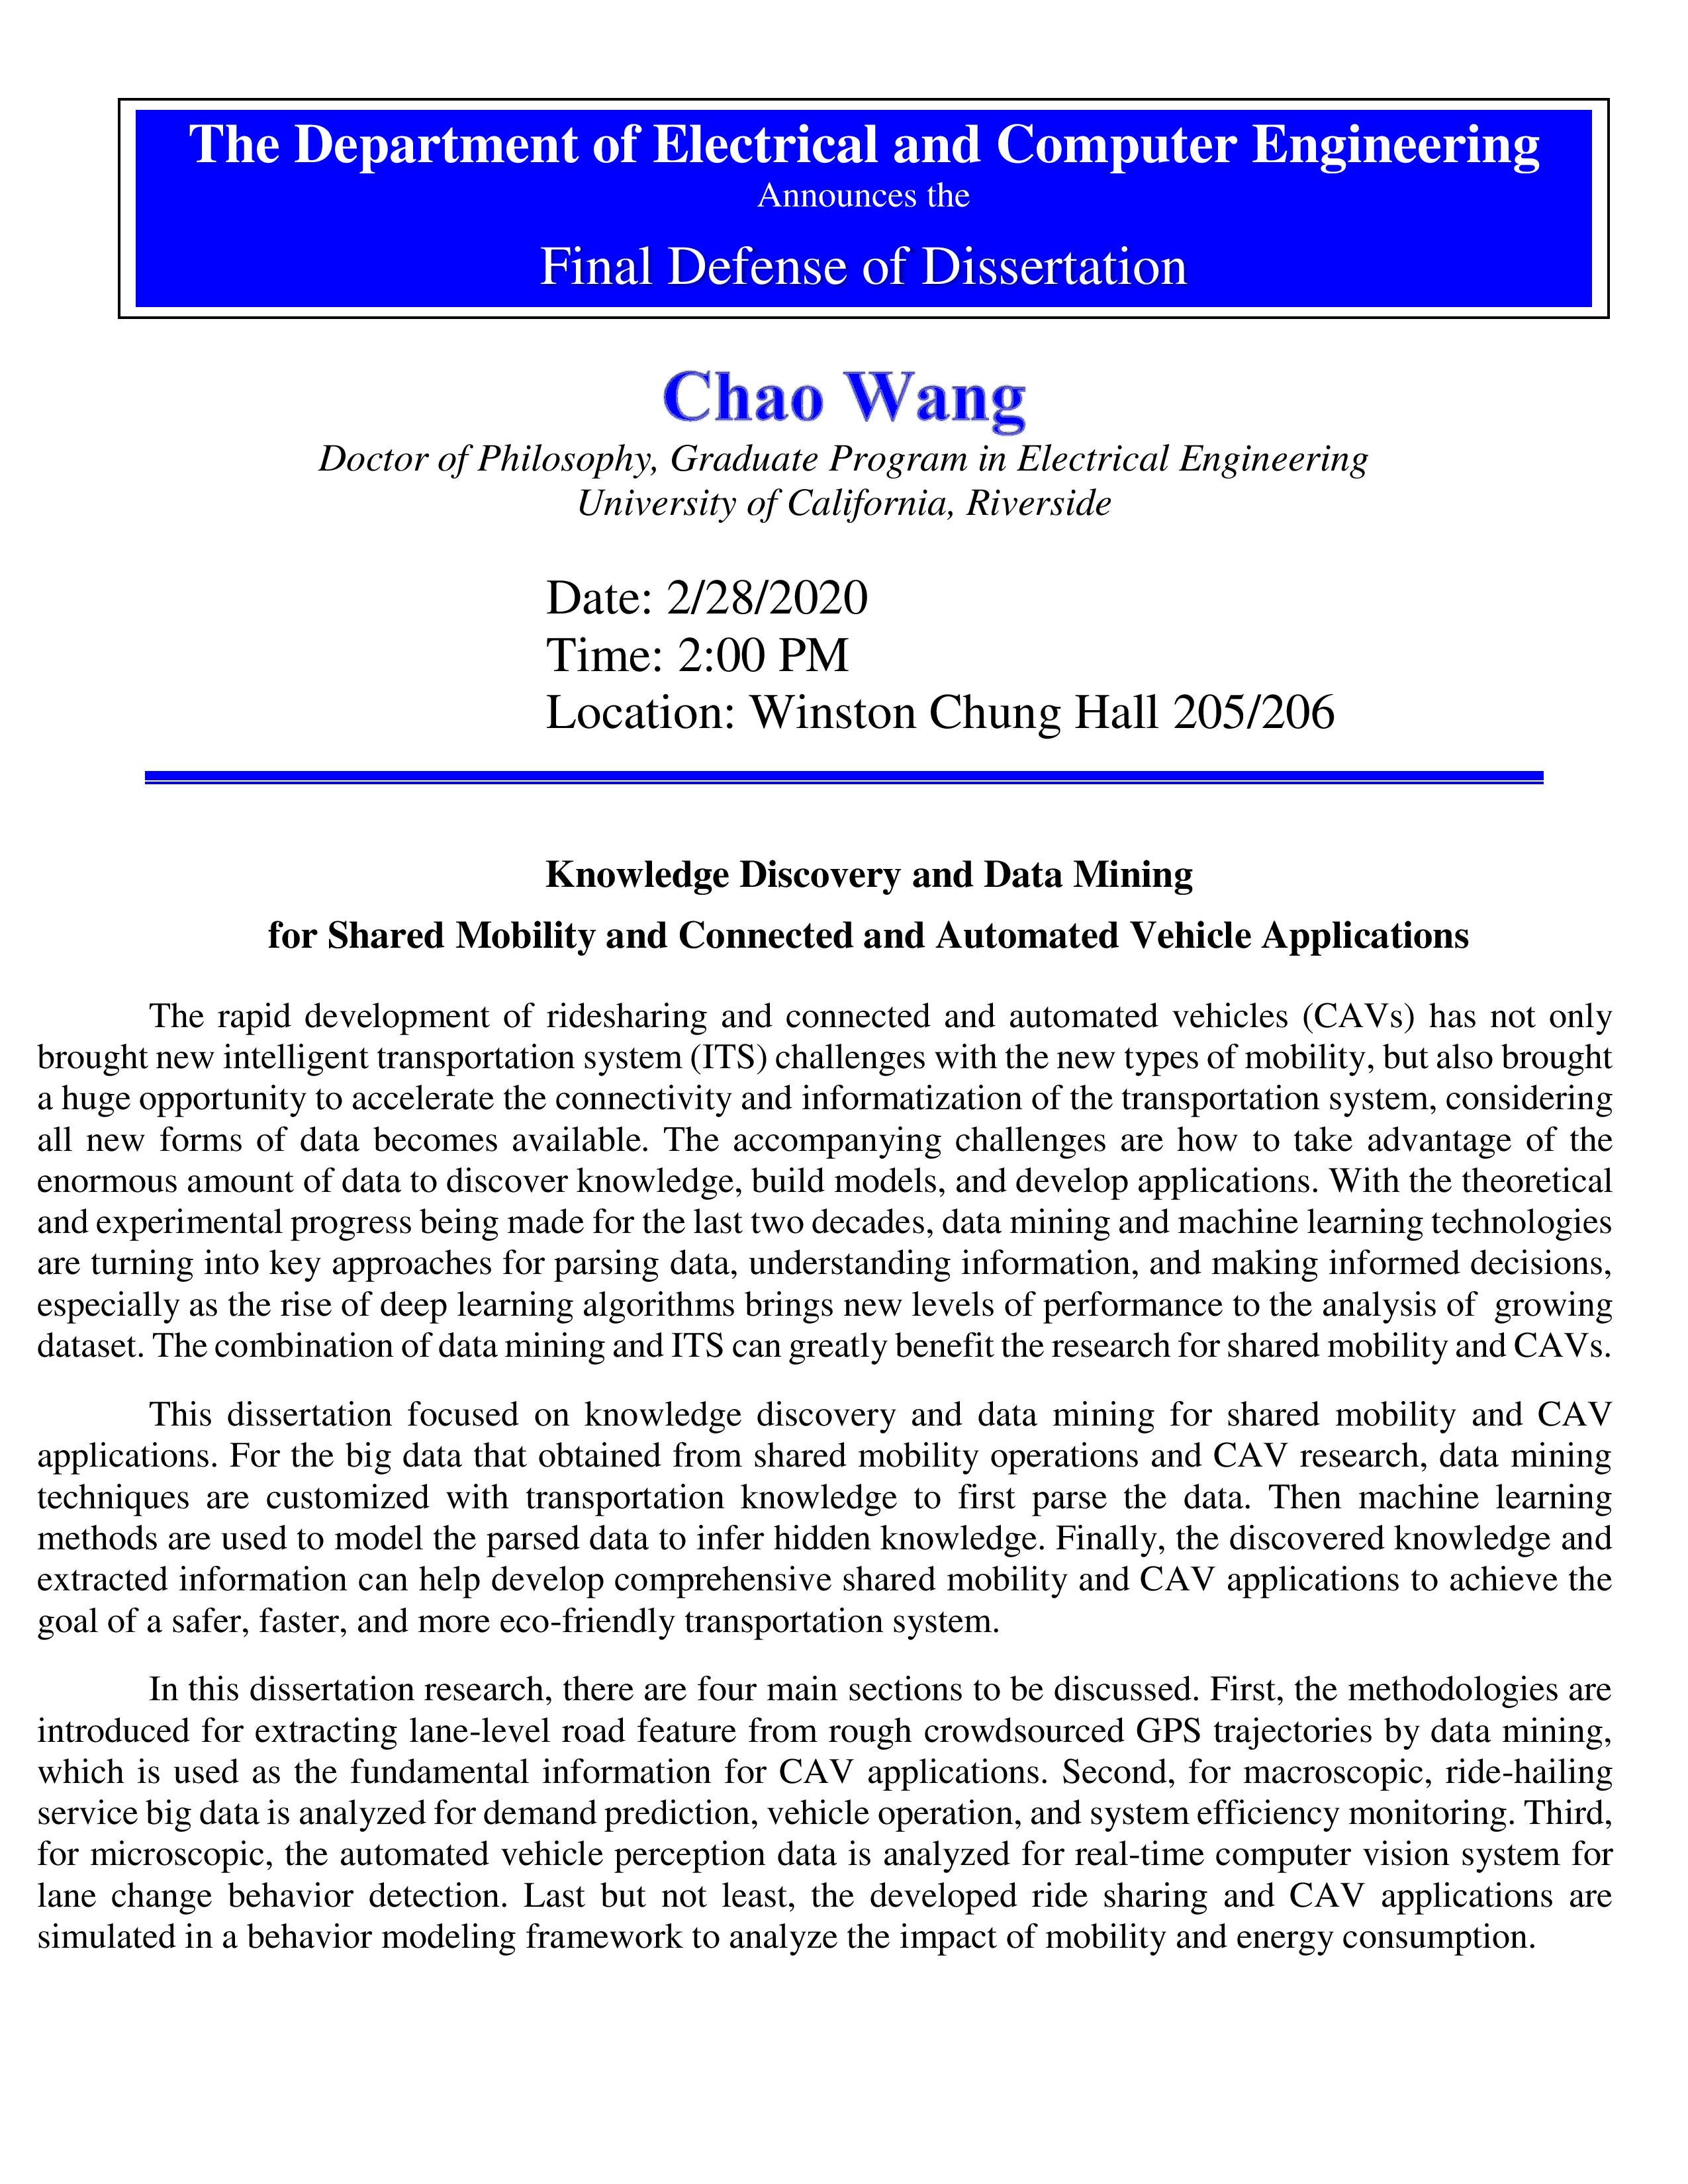 CHAO, Wang PhD Dissertation Defense Flyer